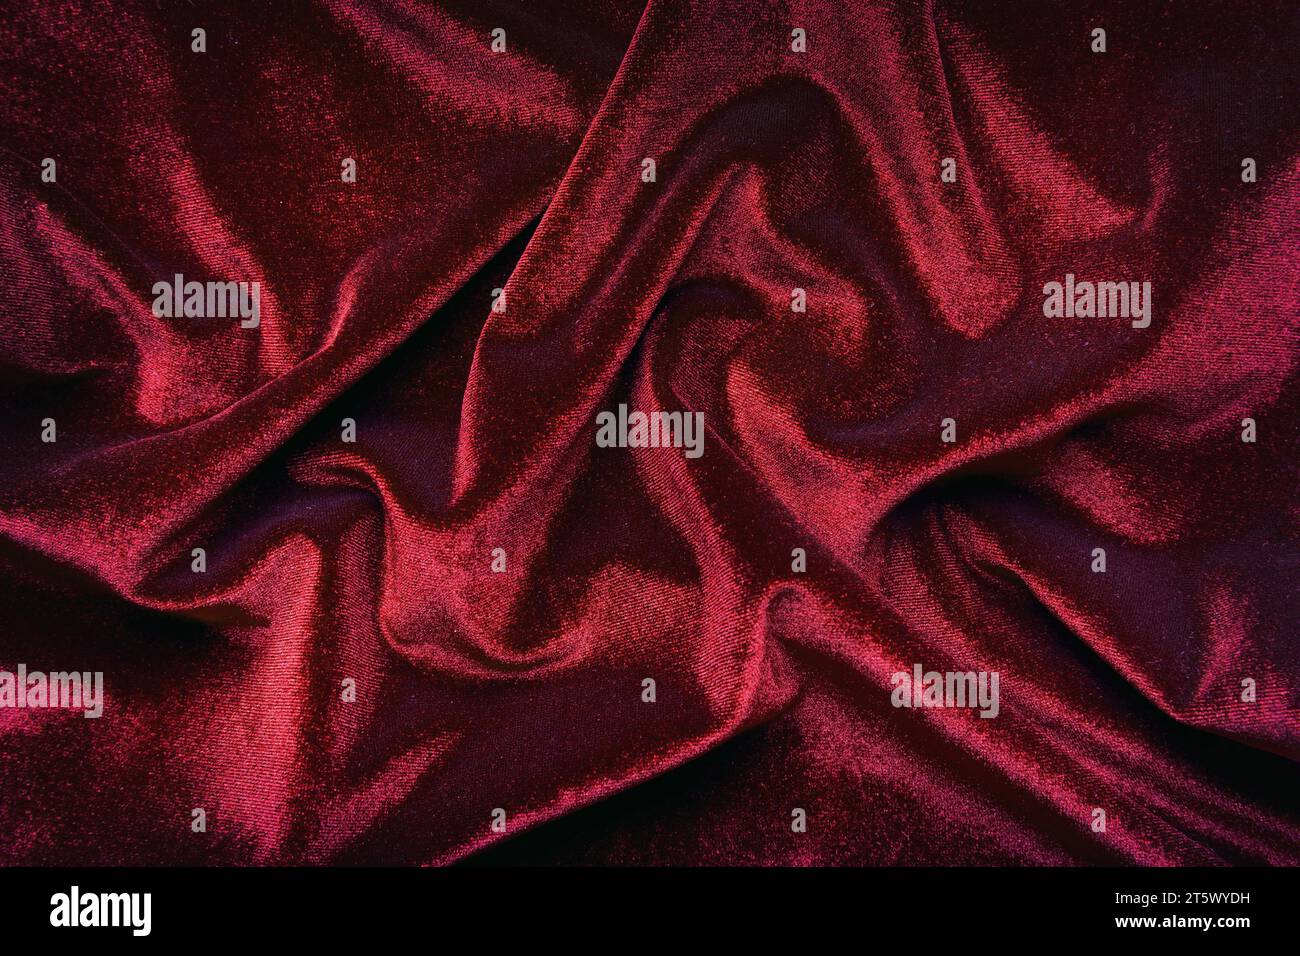 Burgundy velvet fabric as a background Stock Photo